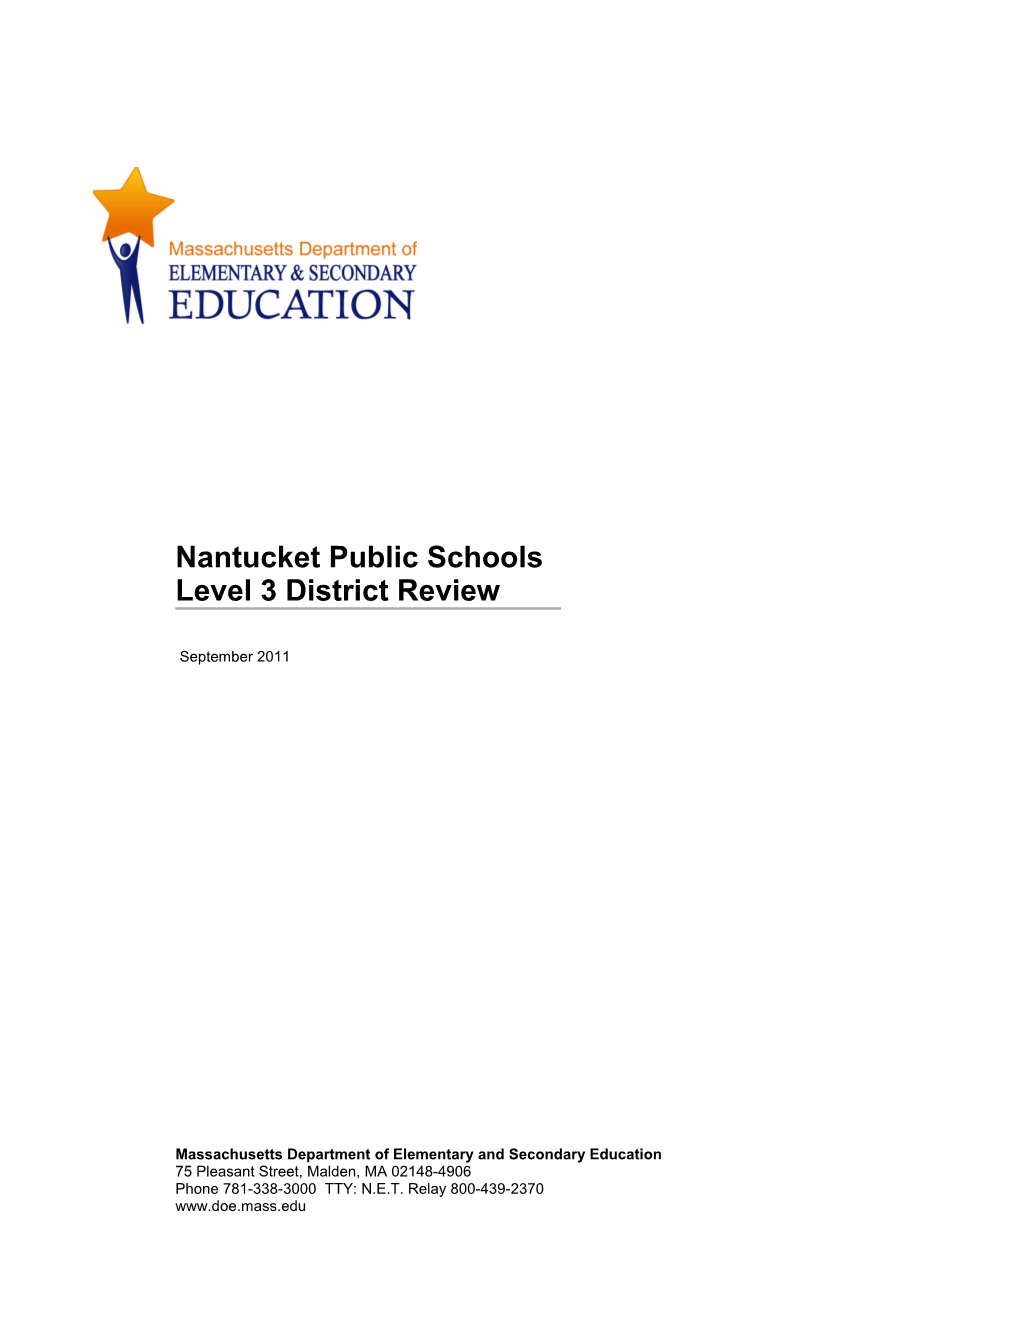 Nantucket Public Schools, Level 3 District Review Report, September 2011